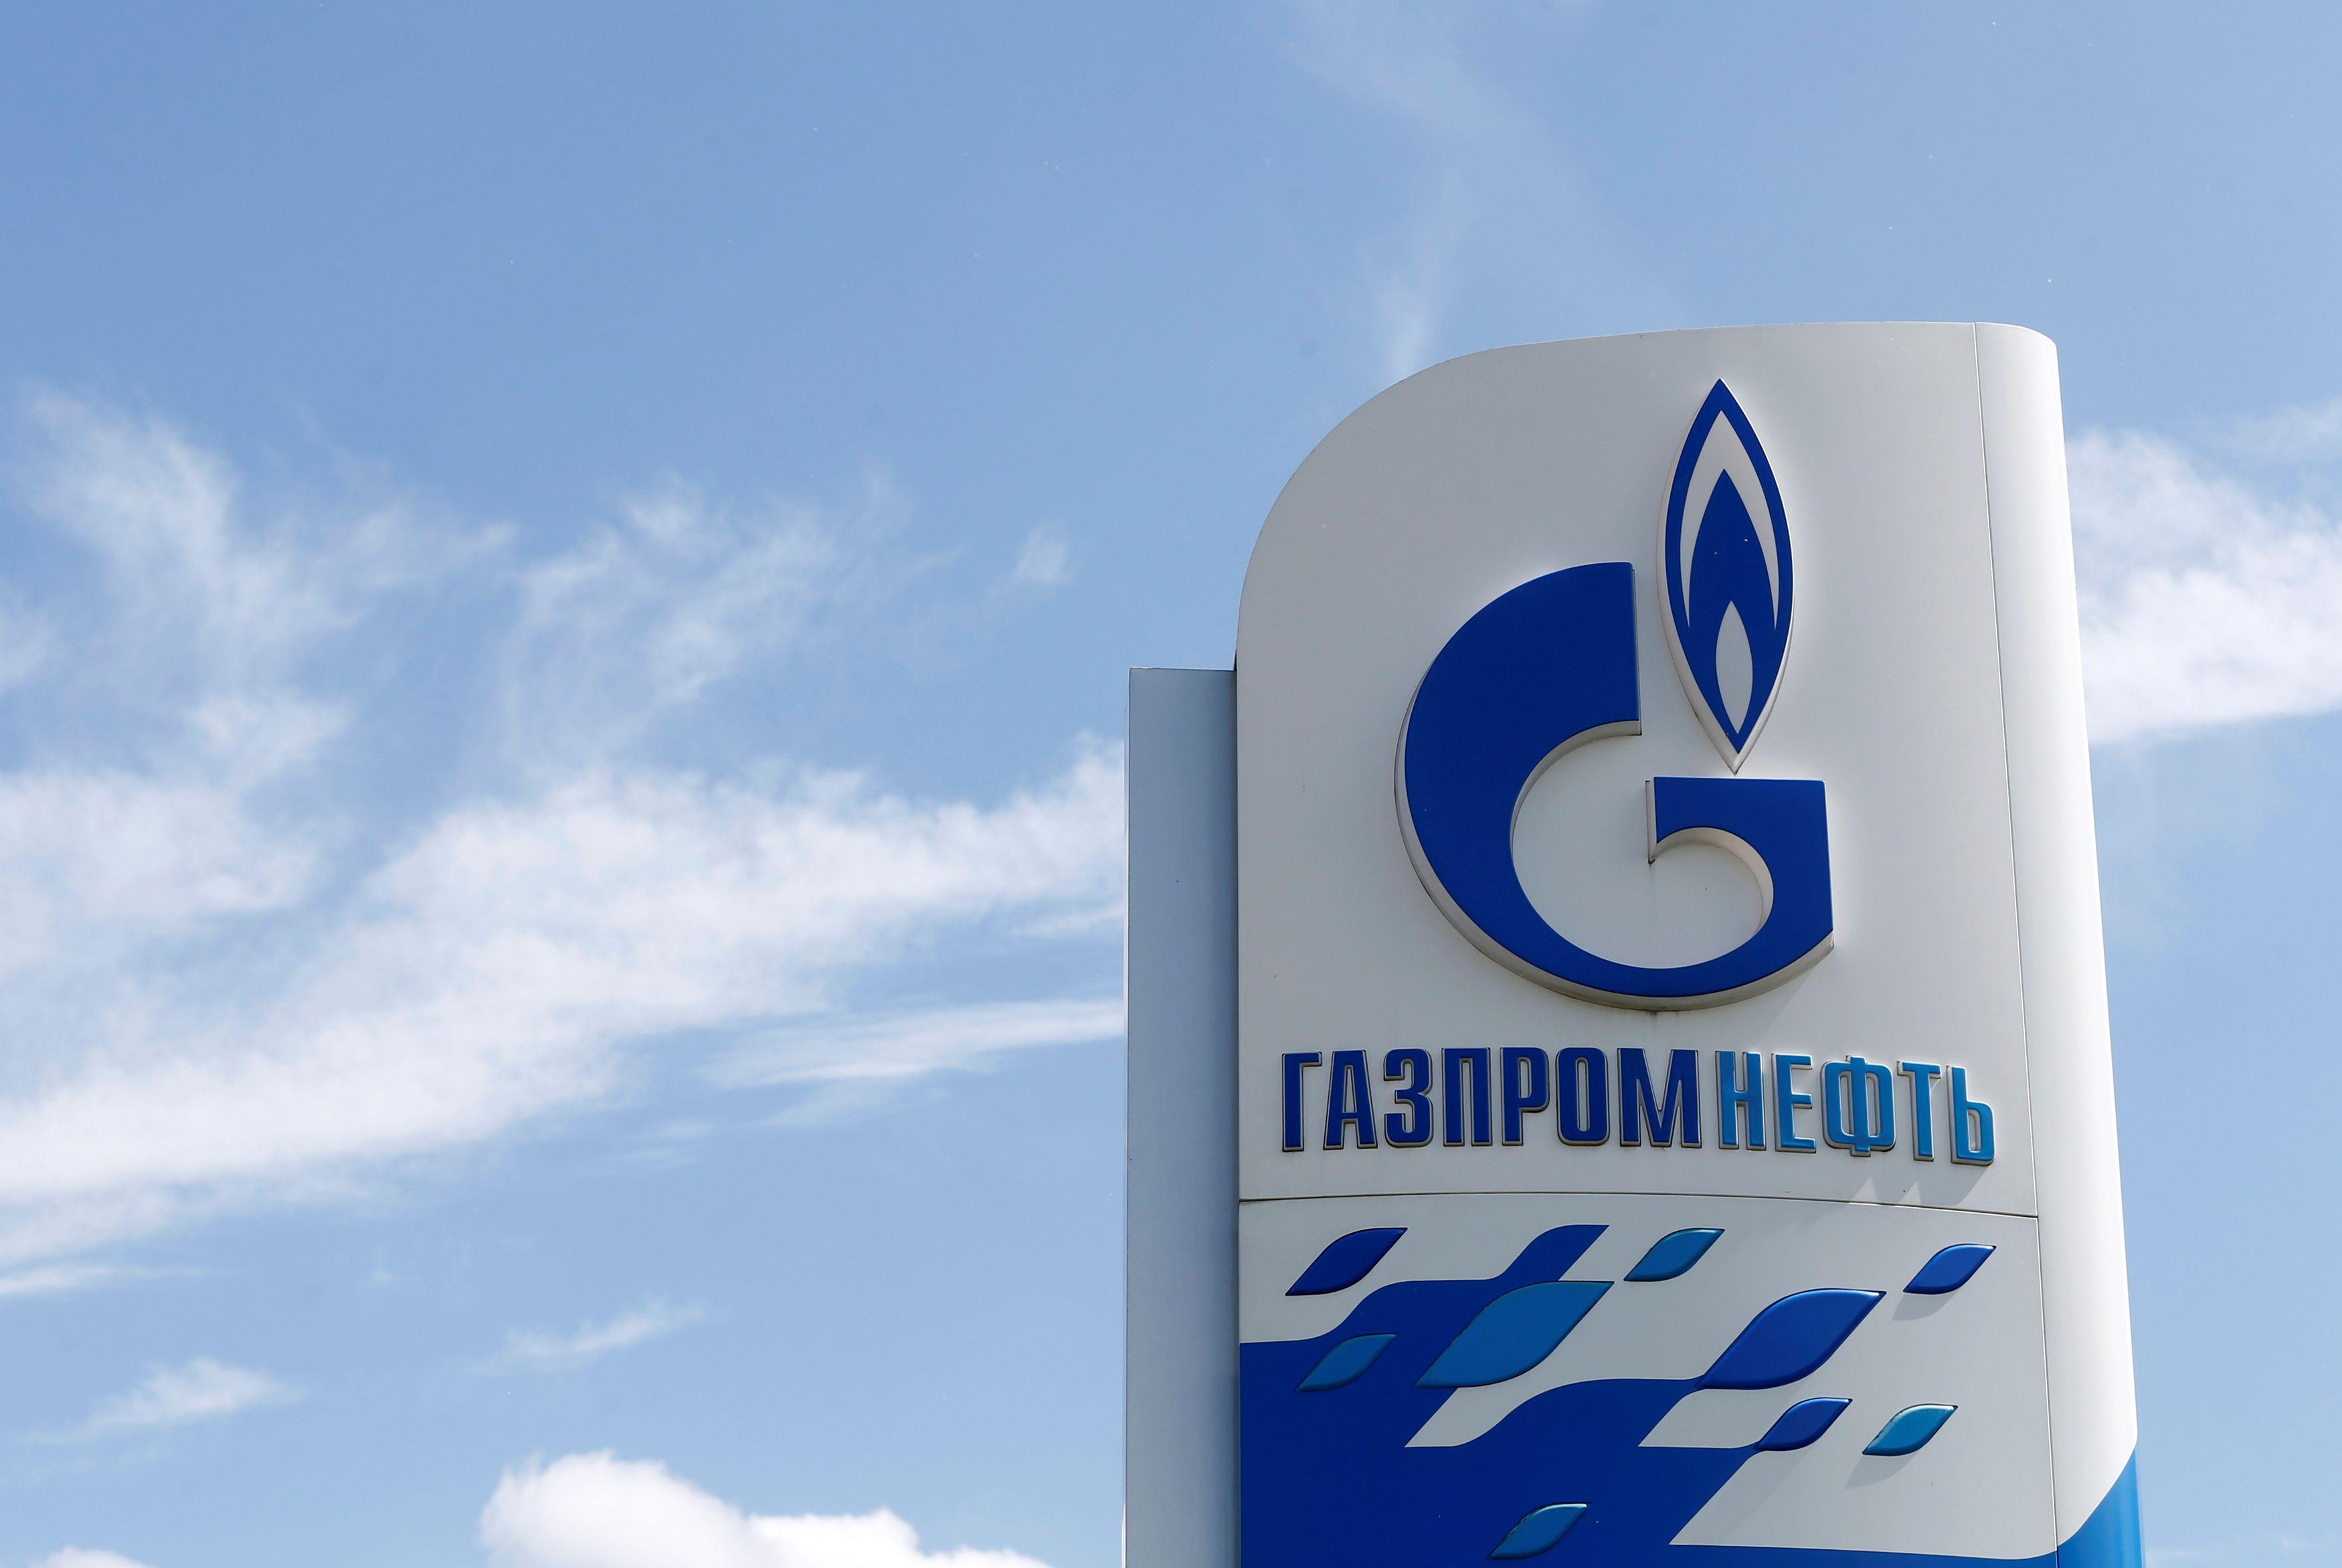 Gazprom Logo - Board with Gazprom Neft oil company logo is on display in Moscow